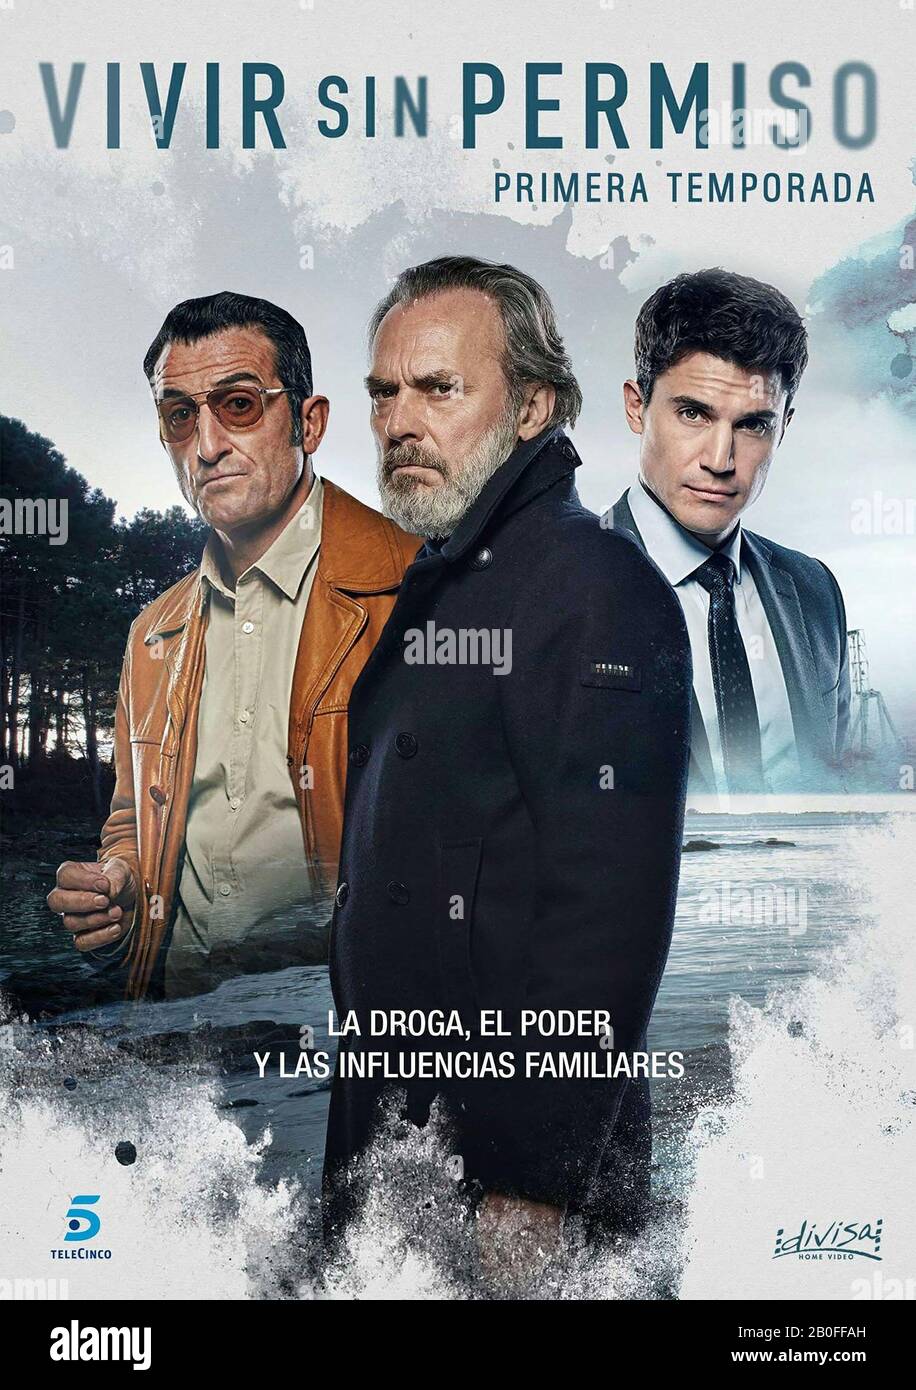 Vivir sin permiso TV Series (2018 -) Spain Created by Aitor Gabilondo Luis  Zahera, Jose Coronado, Alex Gonzalez Poster (Spain Stock Photo - Alamy